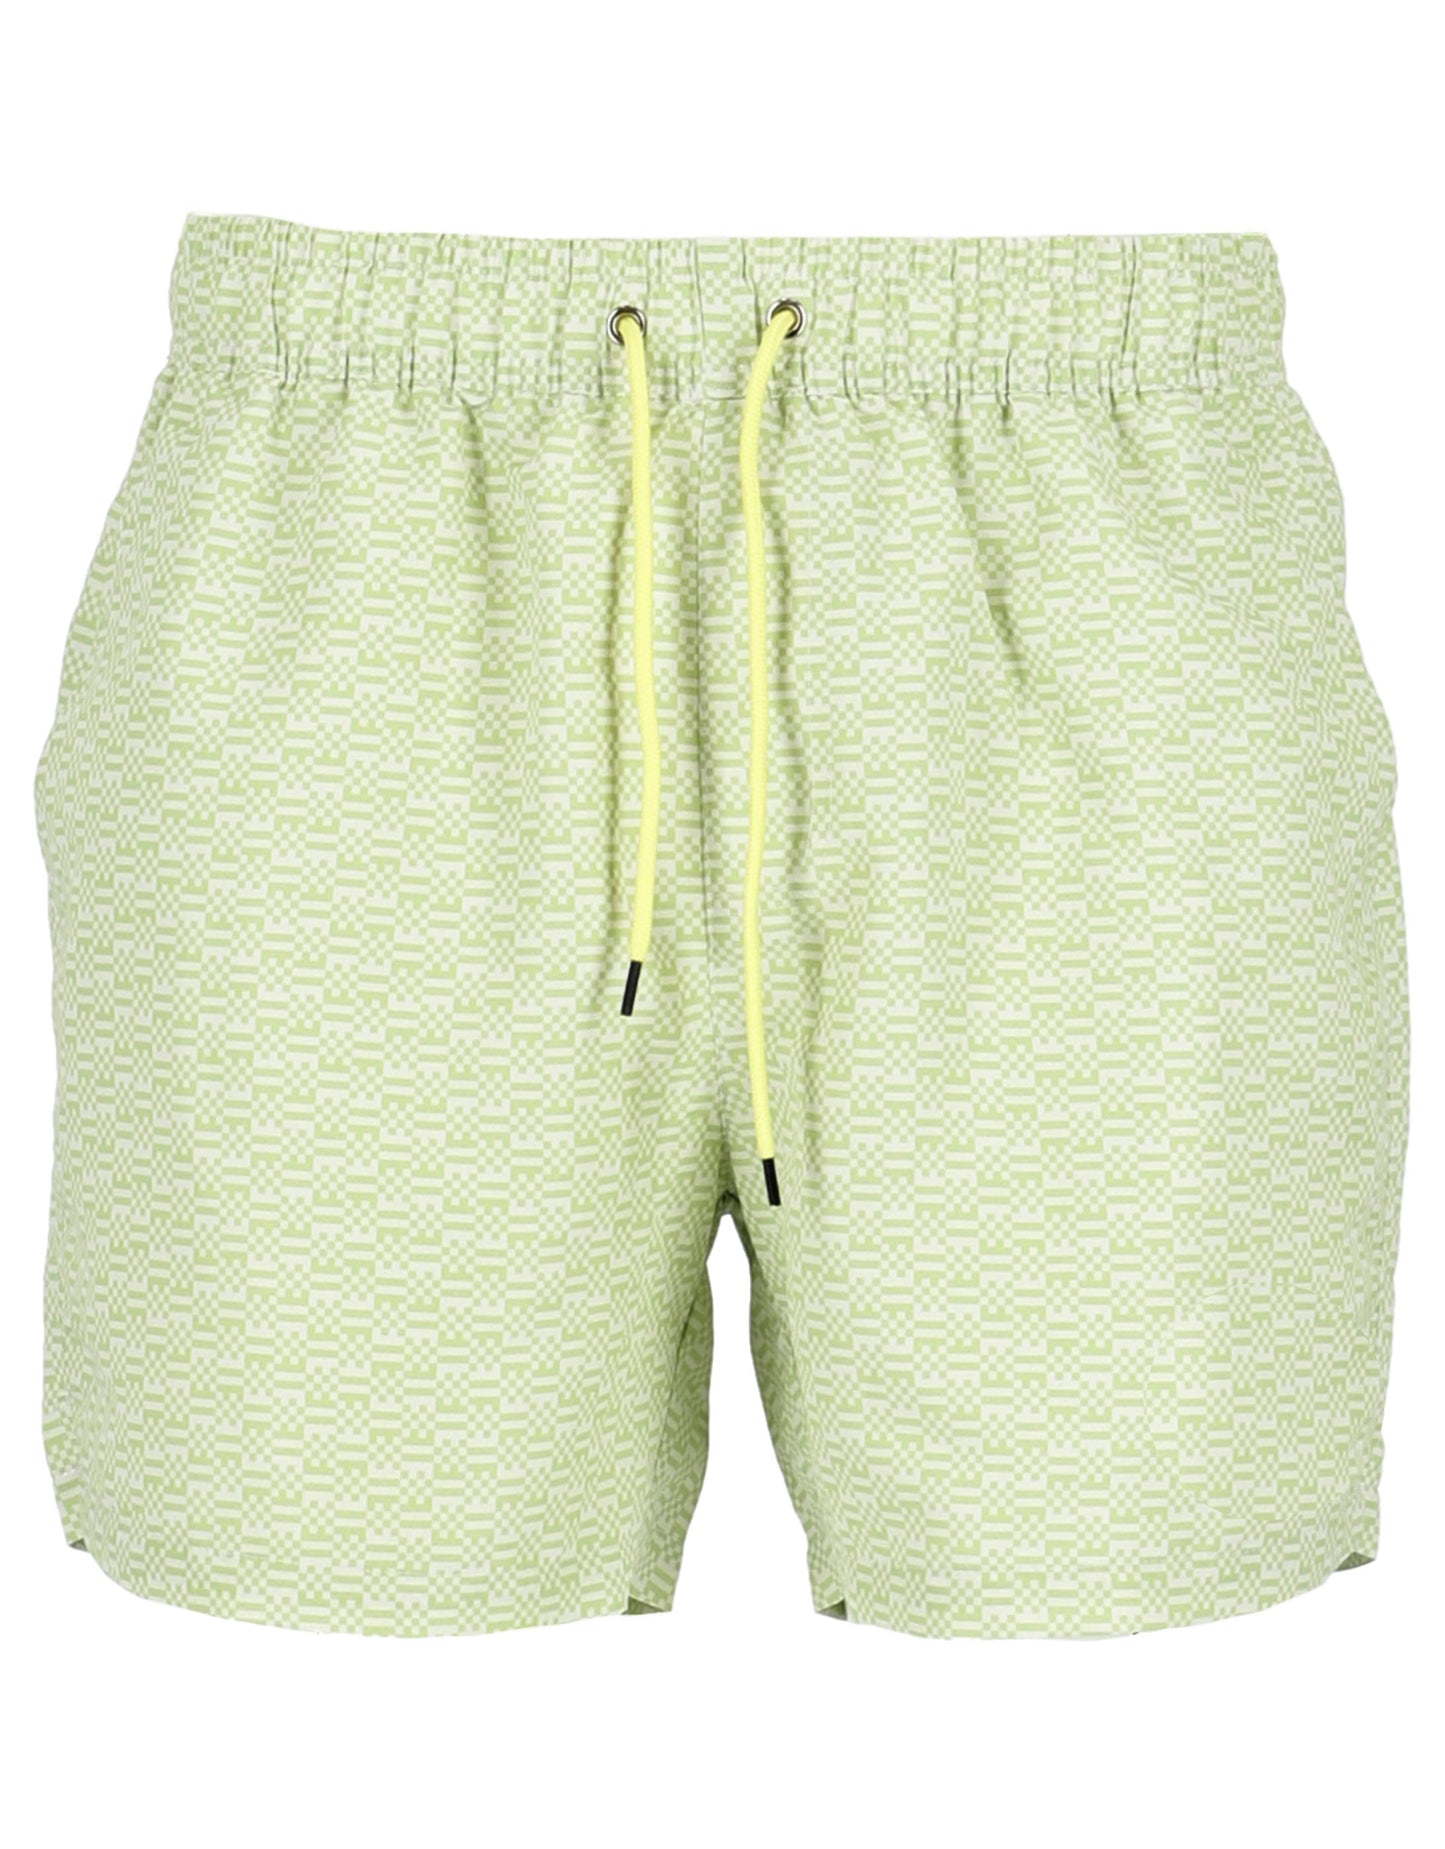 Fashion - Swimming shorts Lime